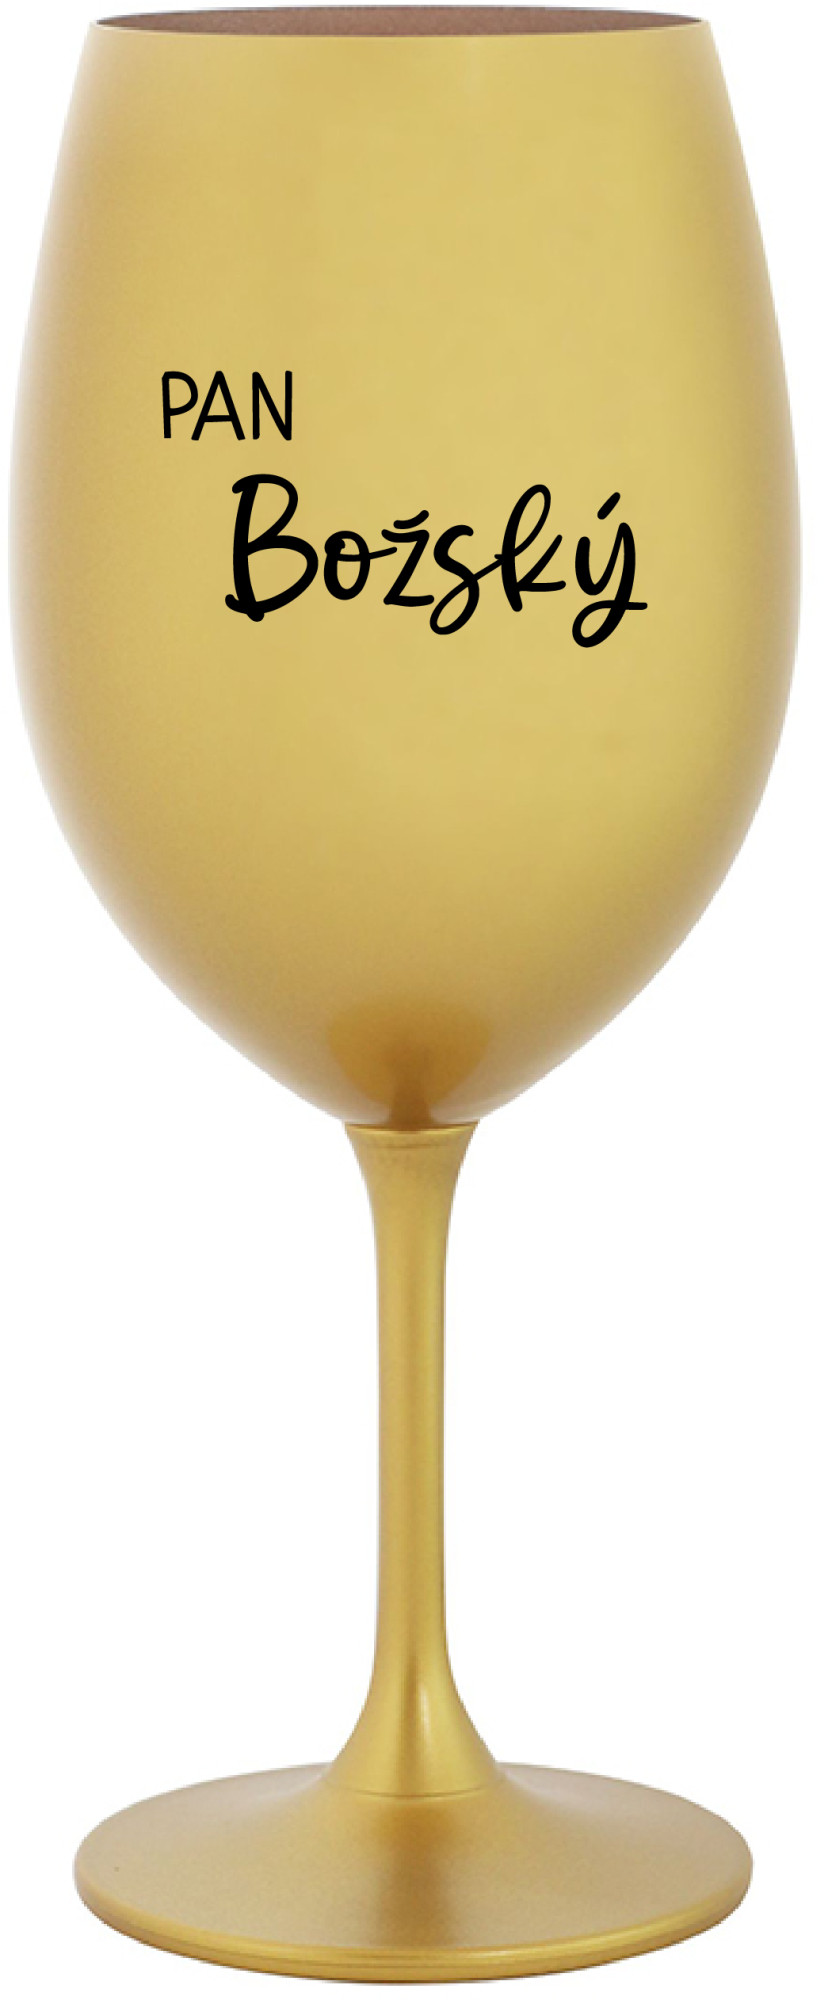 PAN BOŽSKÝ - zlatá sklenice na víno 350 ml